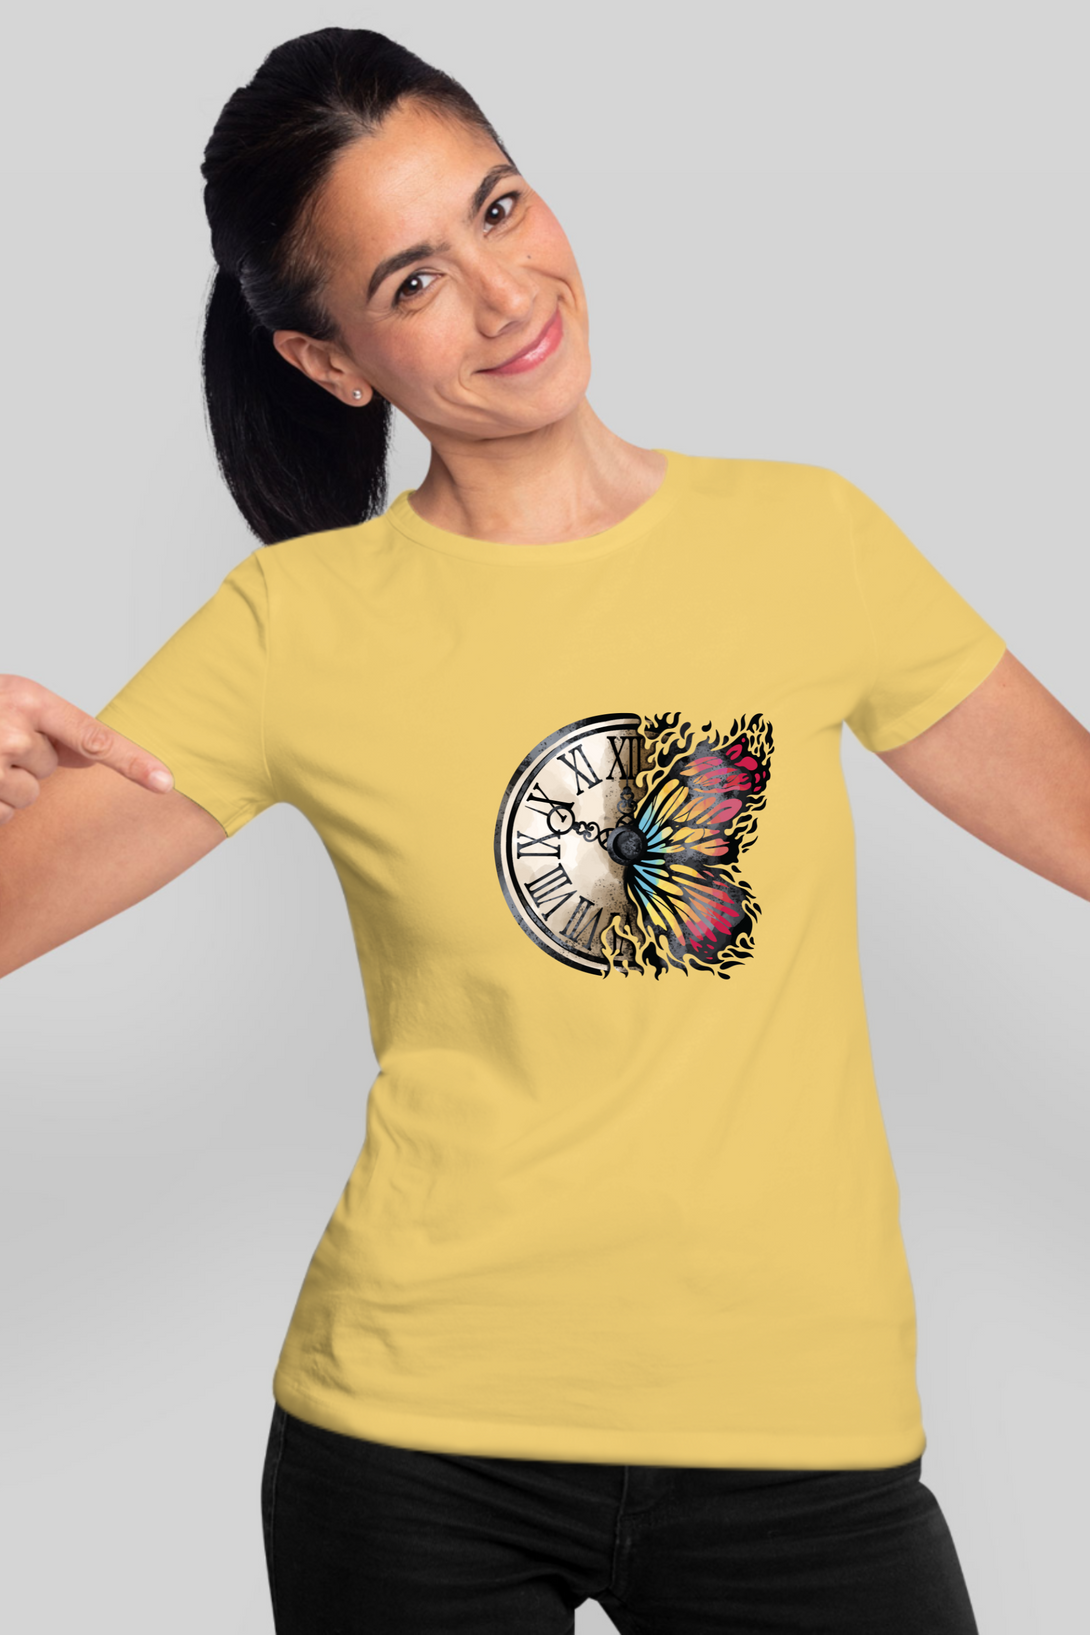 Vintage Clock Printed T-Shirt For Women - WowWaves - 8